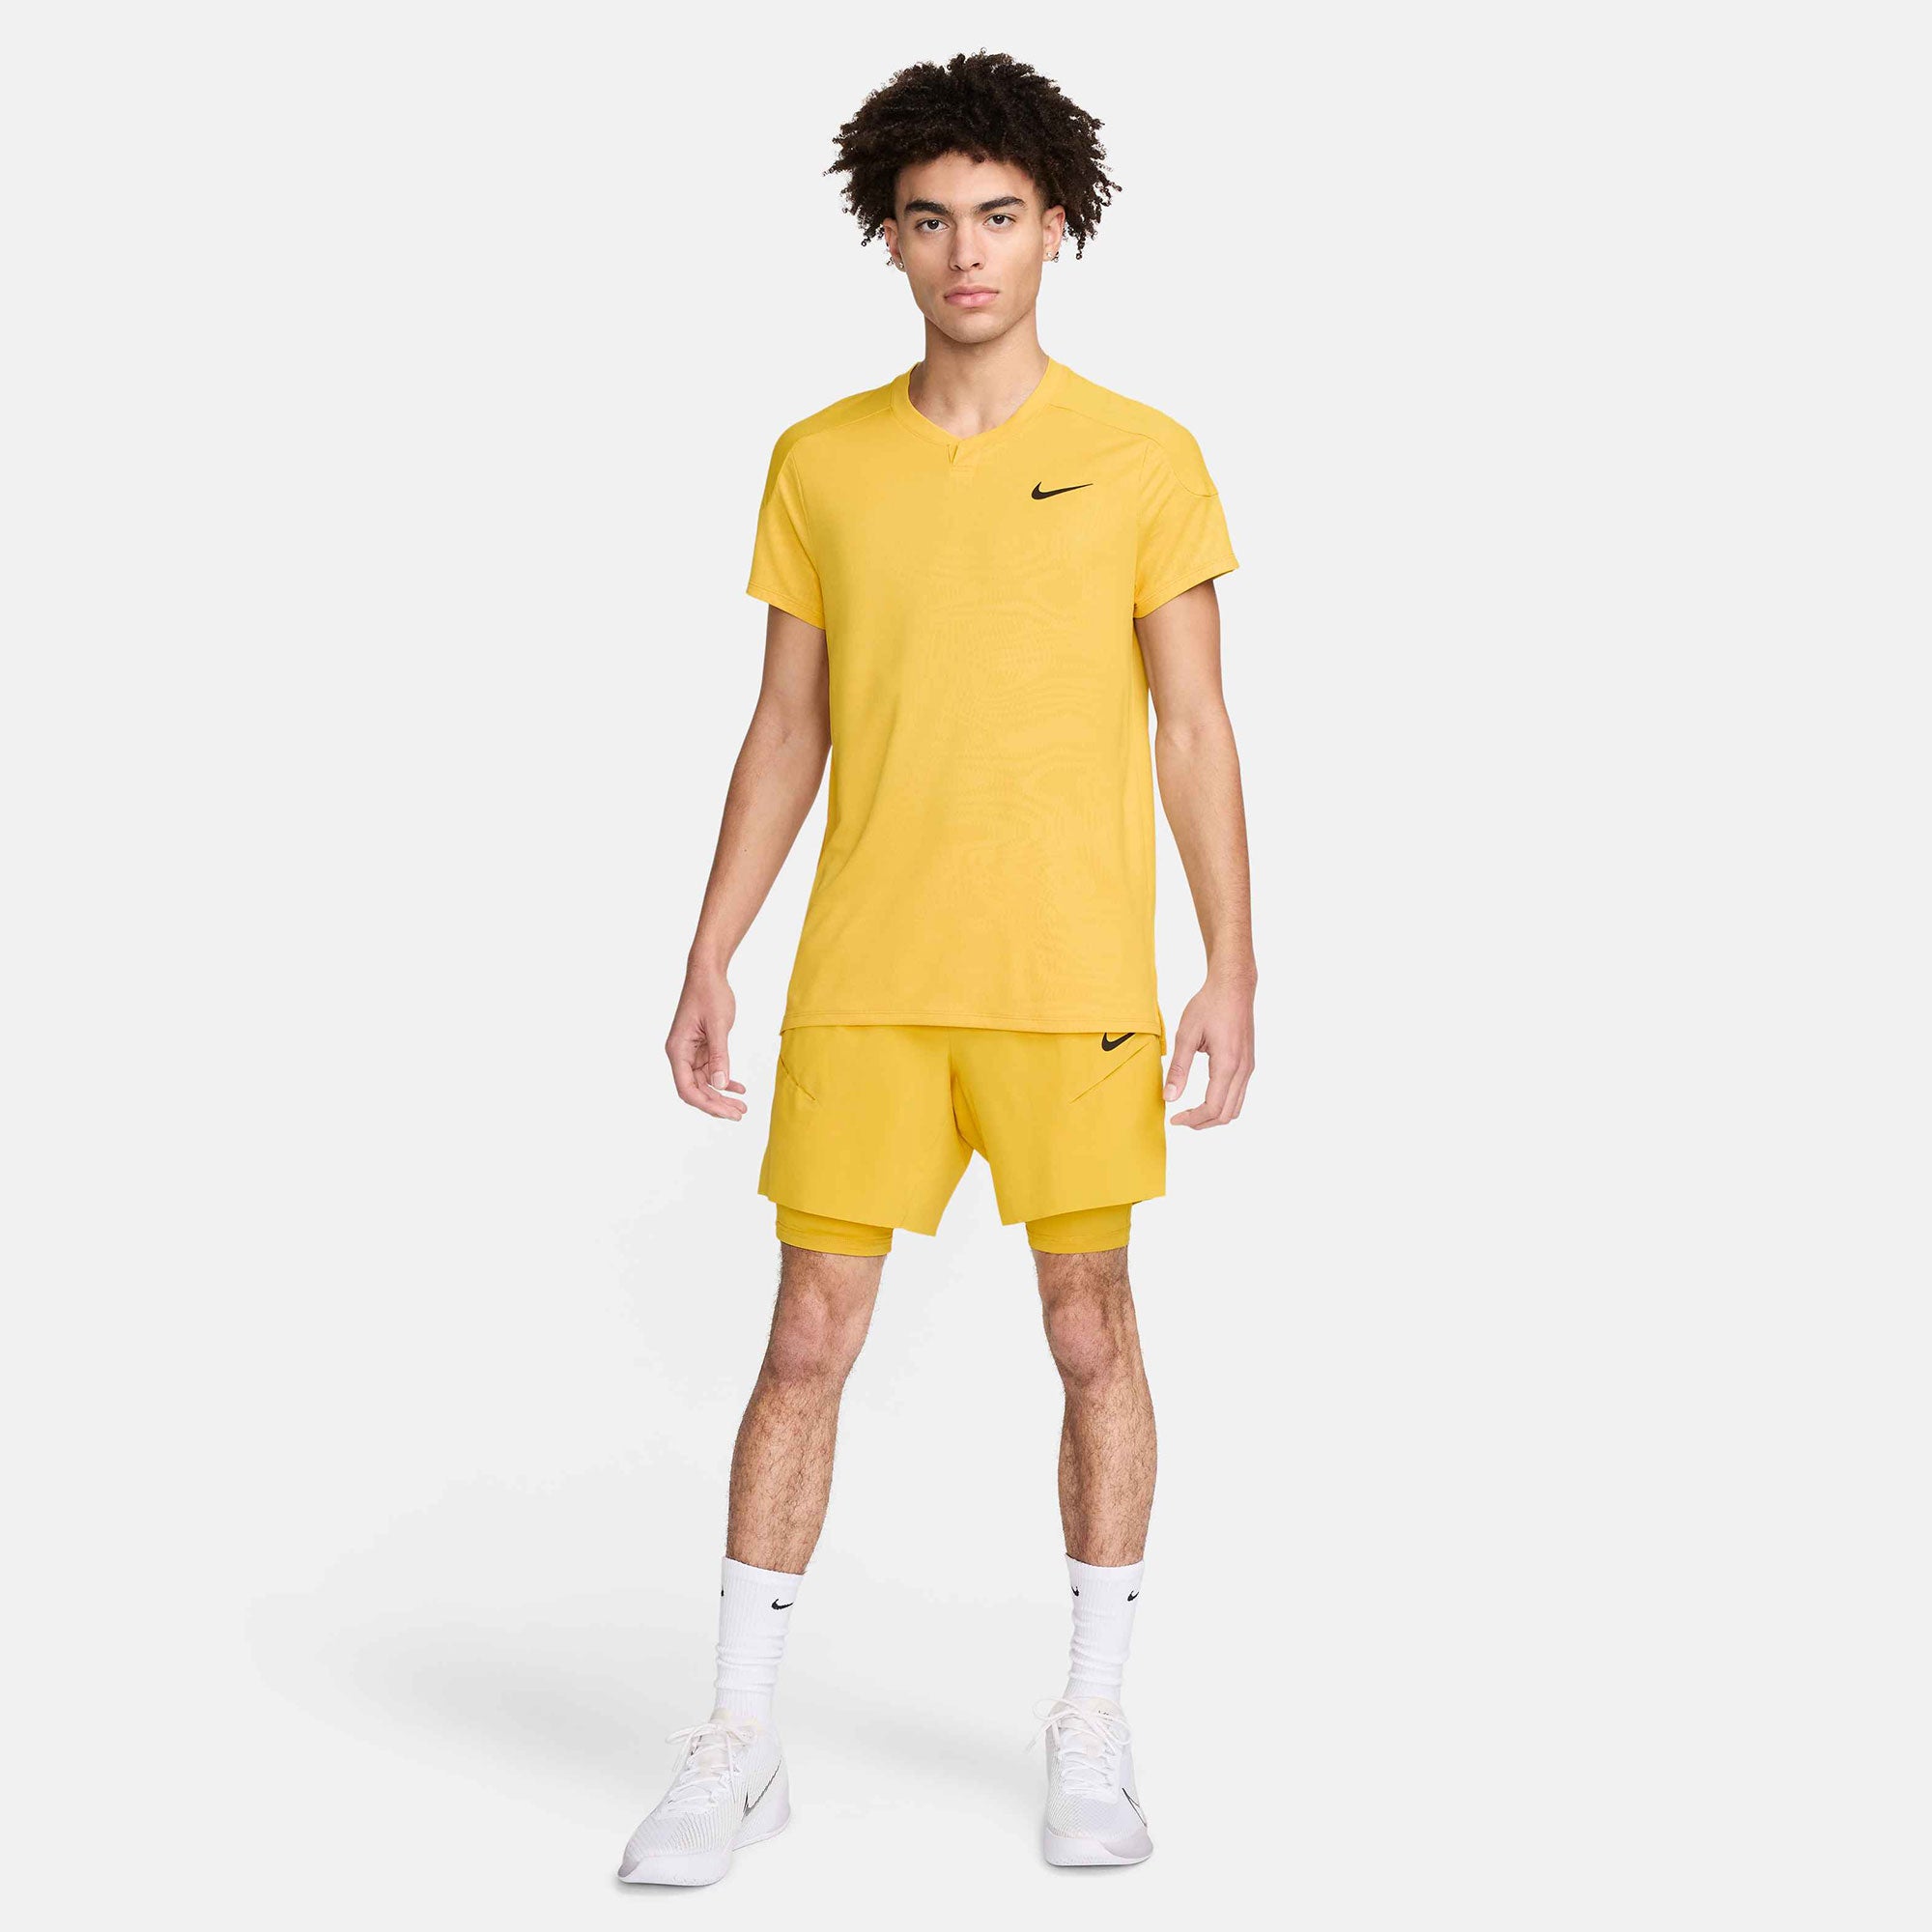 NikeCourt Slam Paris Men's Dri-FIT Tennis Shirt - Yellow (6)